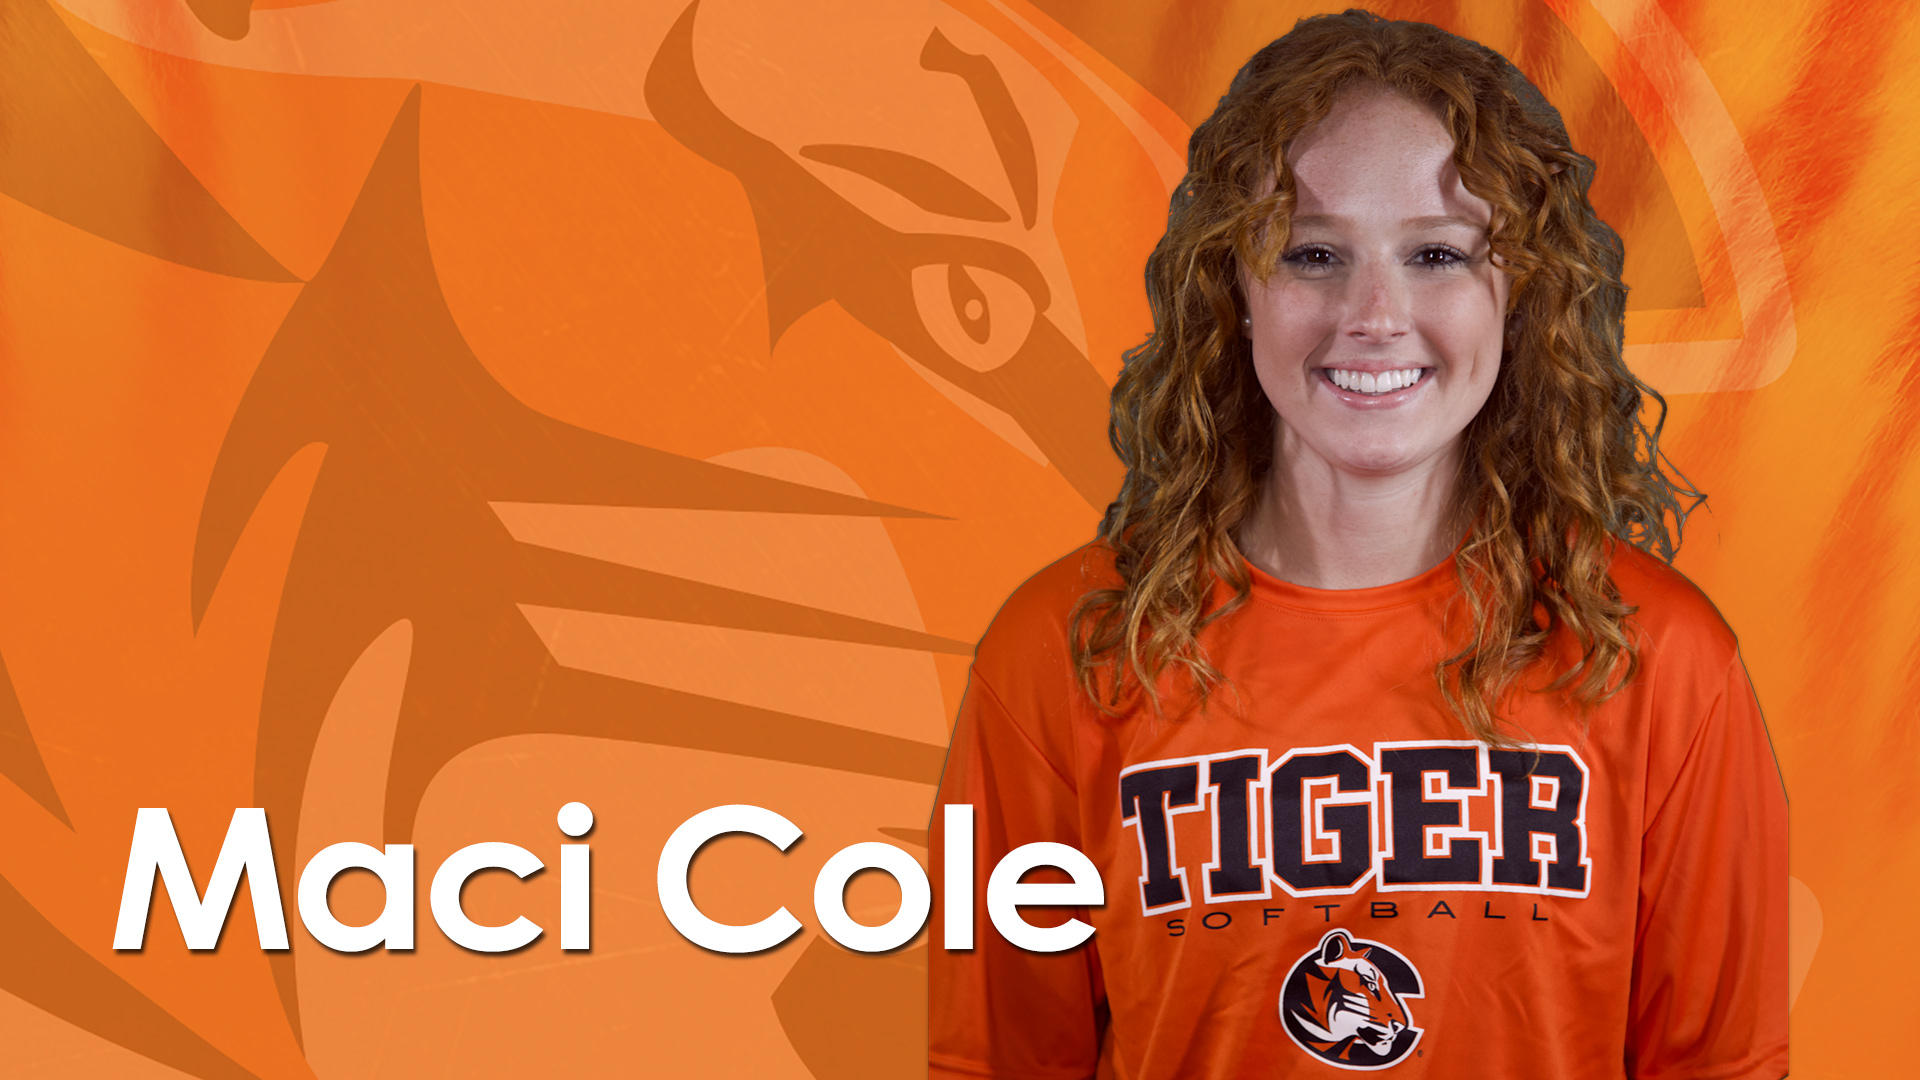 Lady Tiger freshman Maci Cole nabs All-American honors